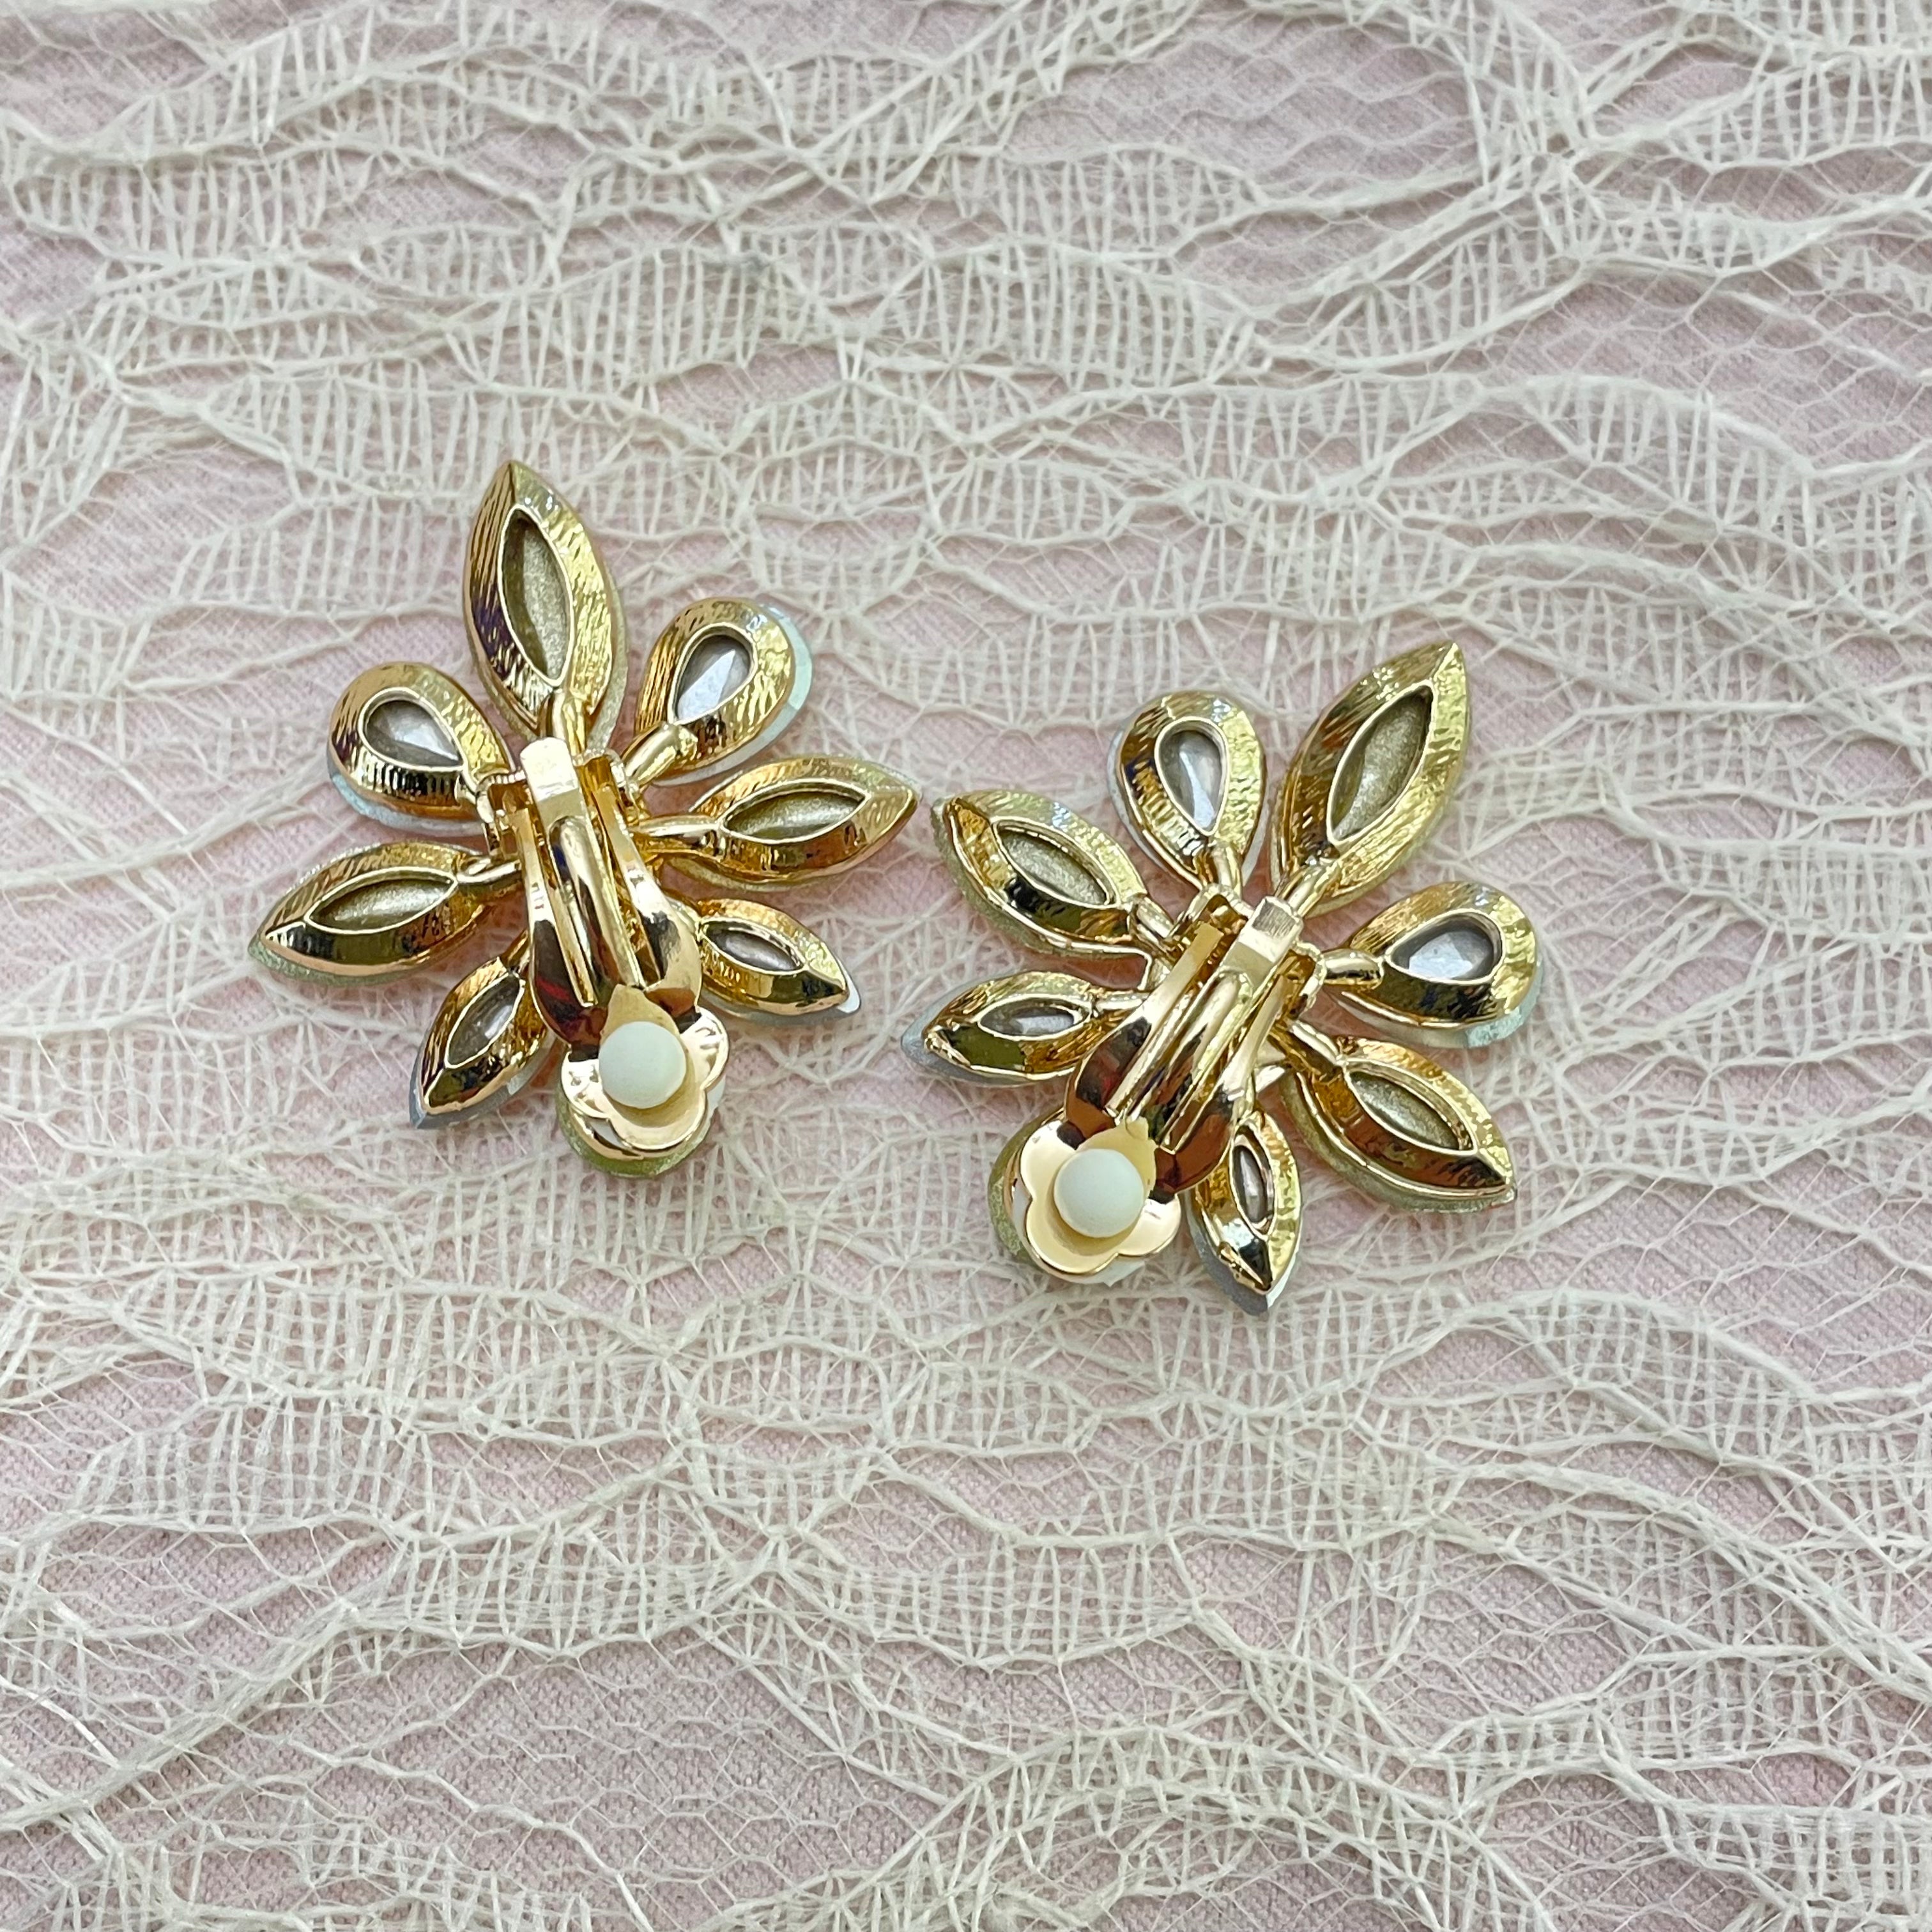 Peach marquise clips earrings